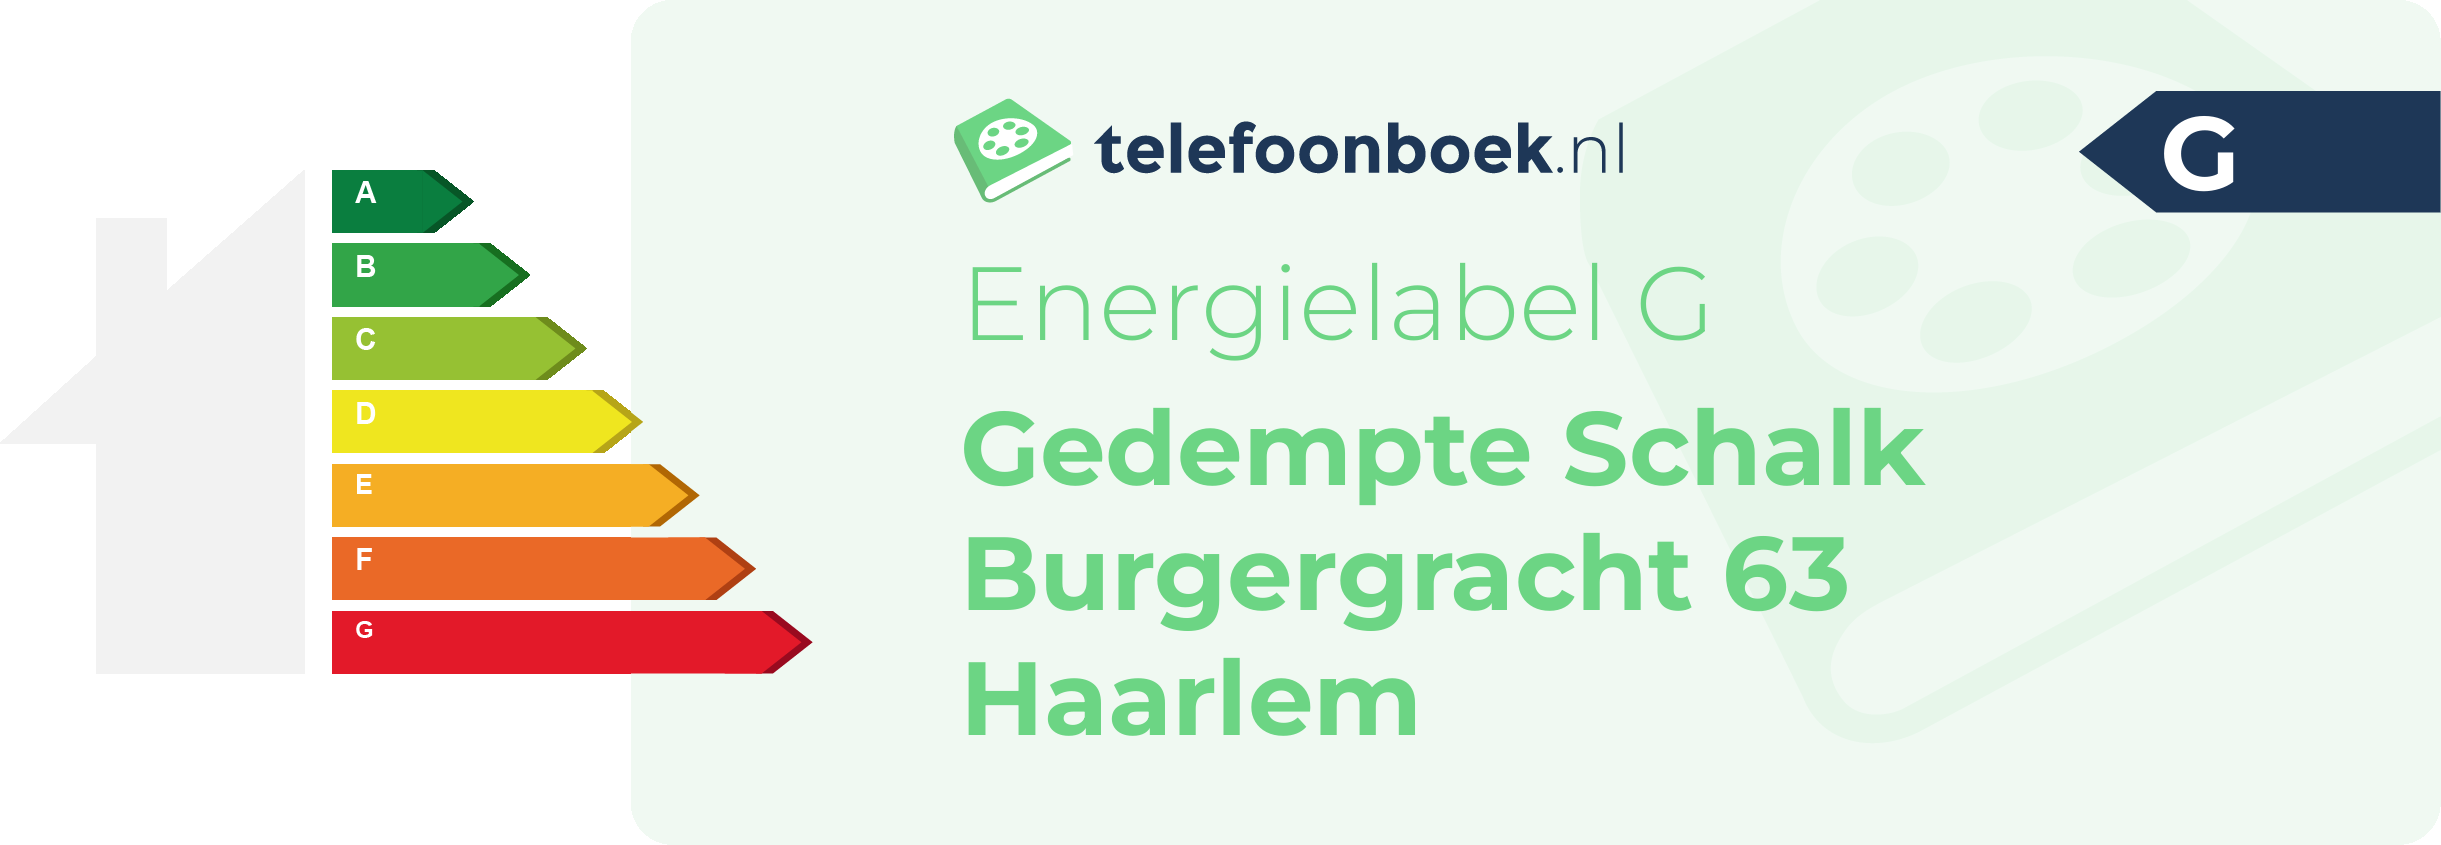 Energielabel Gedempte Schalk Burgergracht 63 Haarlem